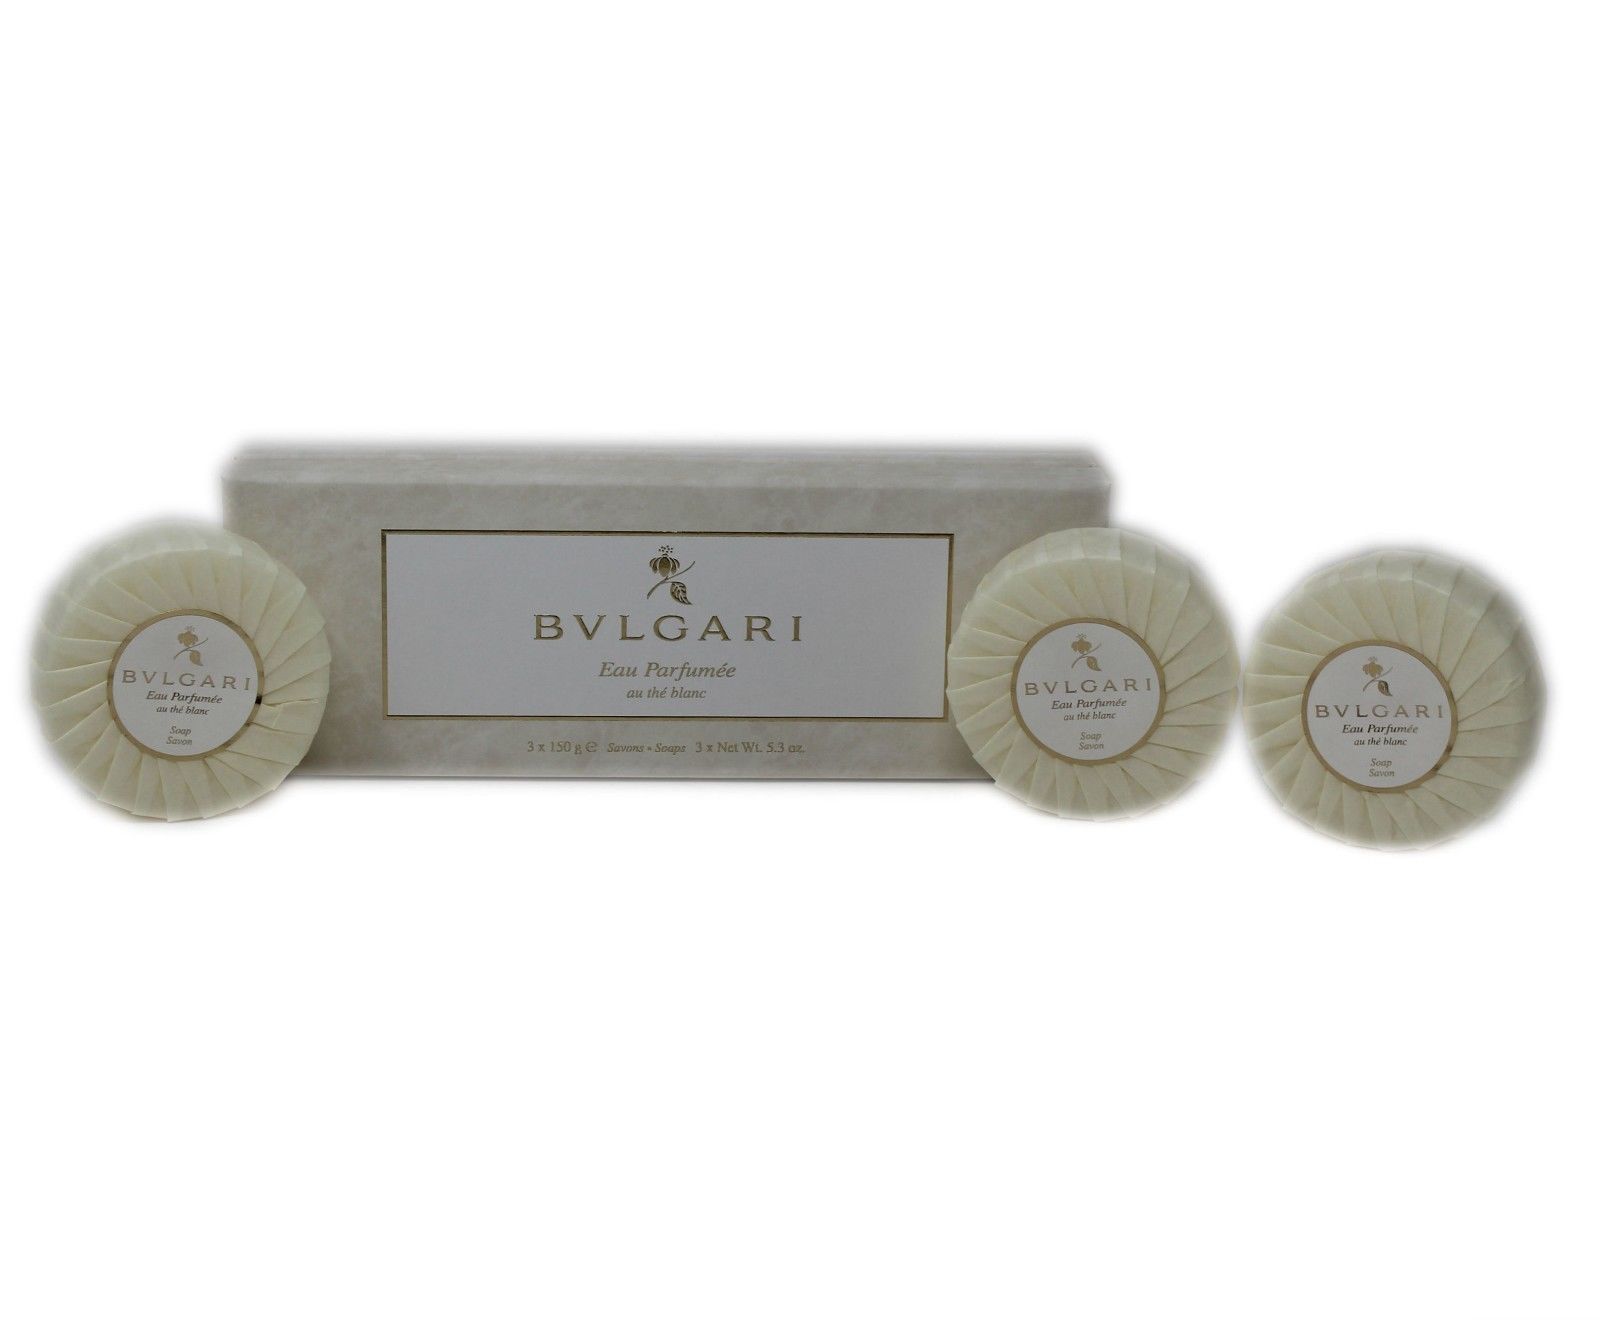 bvlgari soap au the blanc